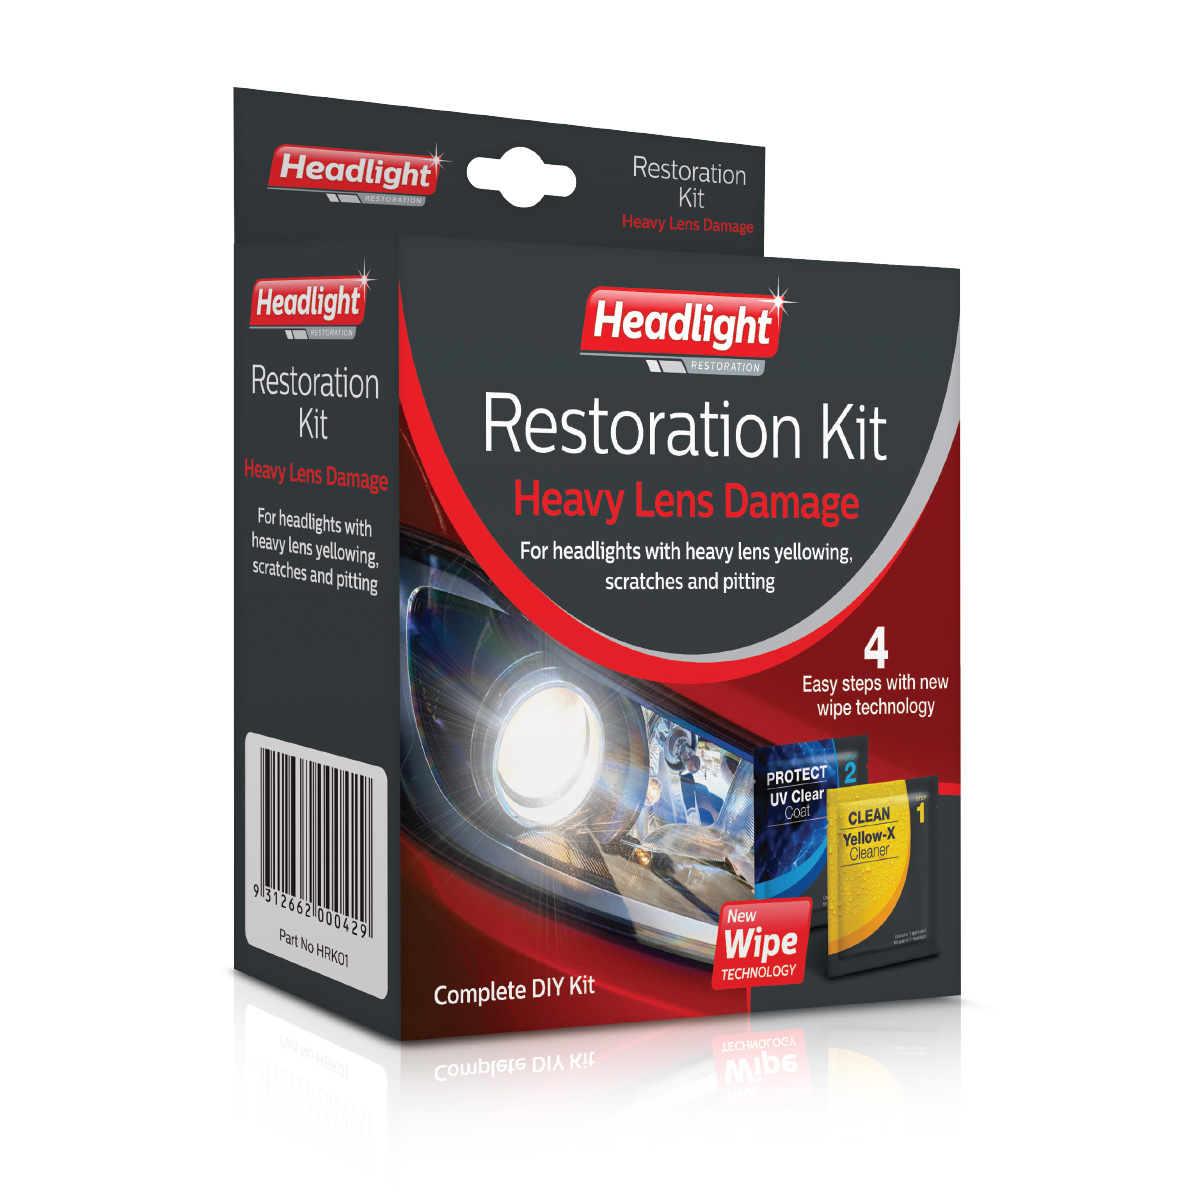 Restoration kit heavy lens